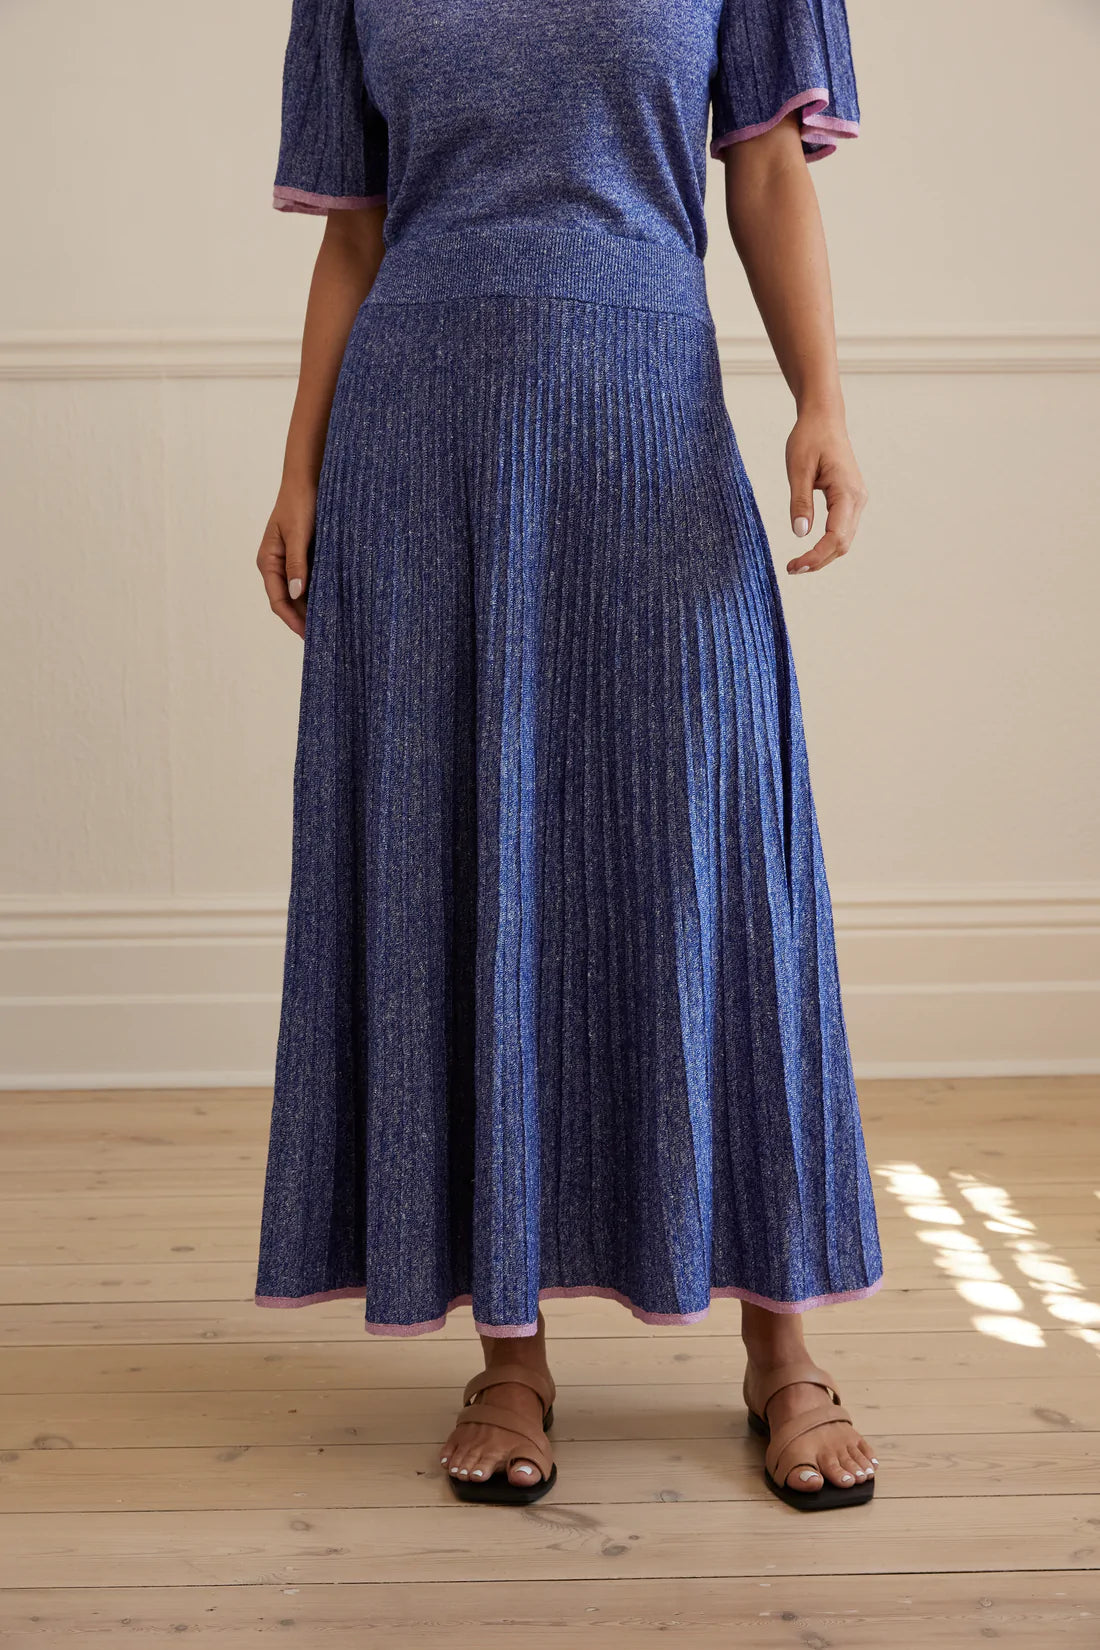 Mill & Hide - Iris & Wool - Clementine Skirt